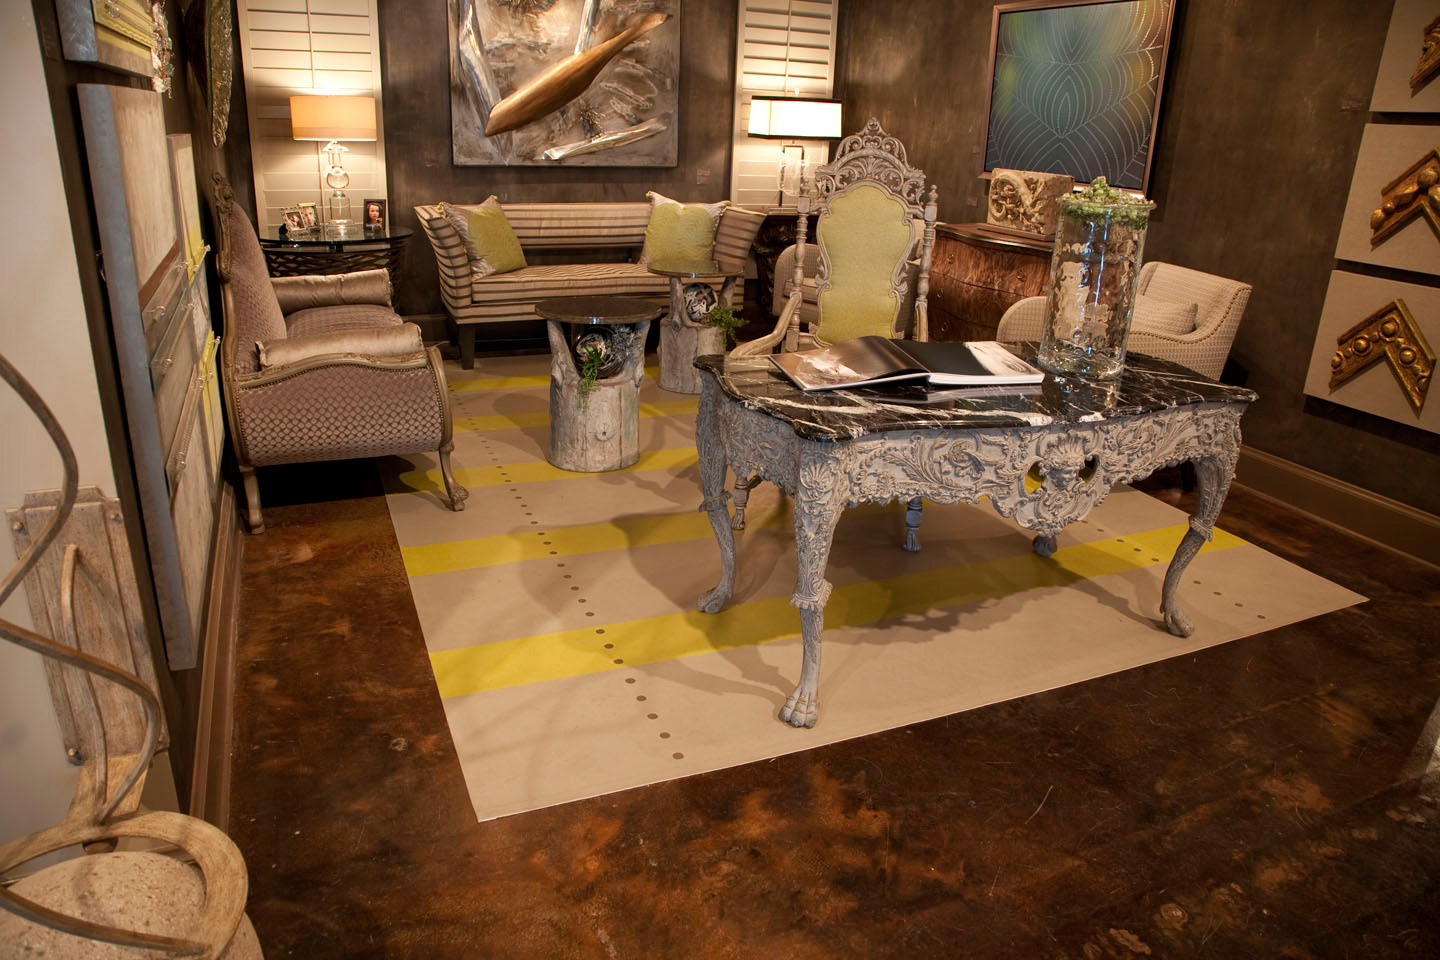  Finish on desk at Pettigrew Showroom, Dallas Texas  Hand painted floor cloth -&nbsp; Sold  